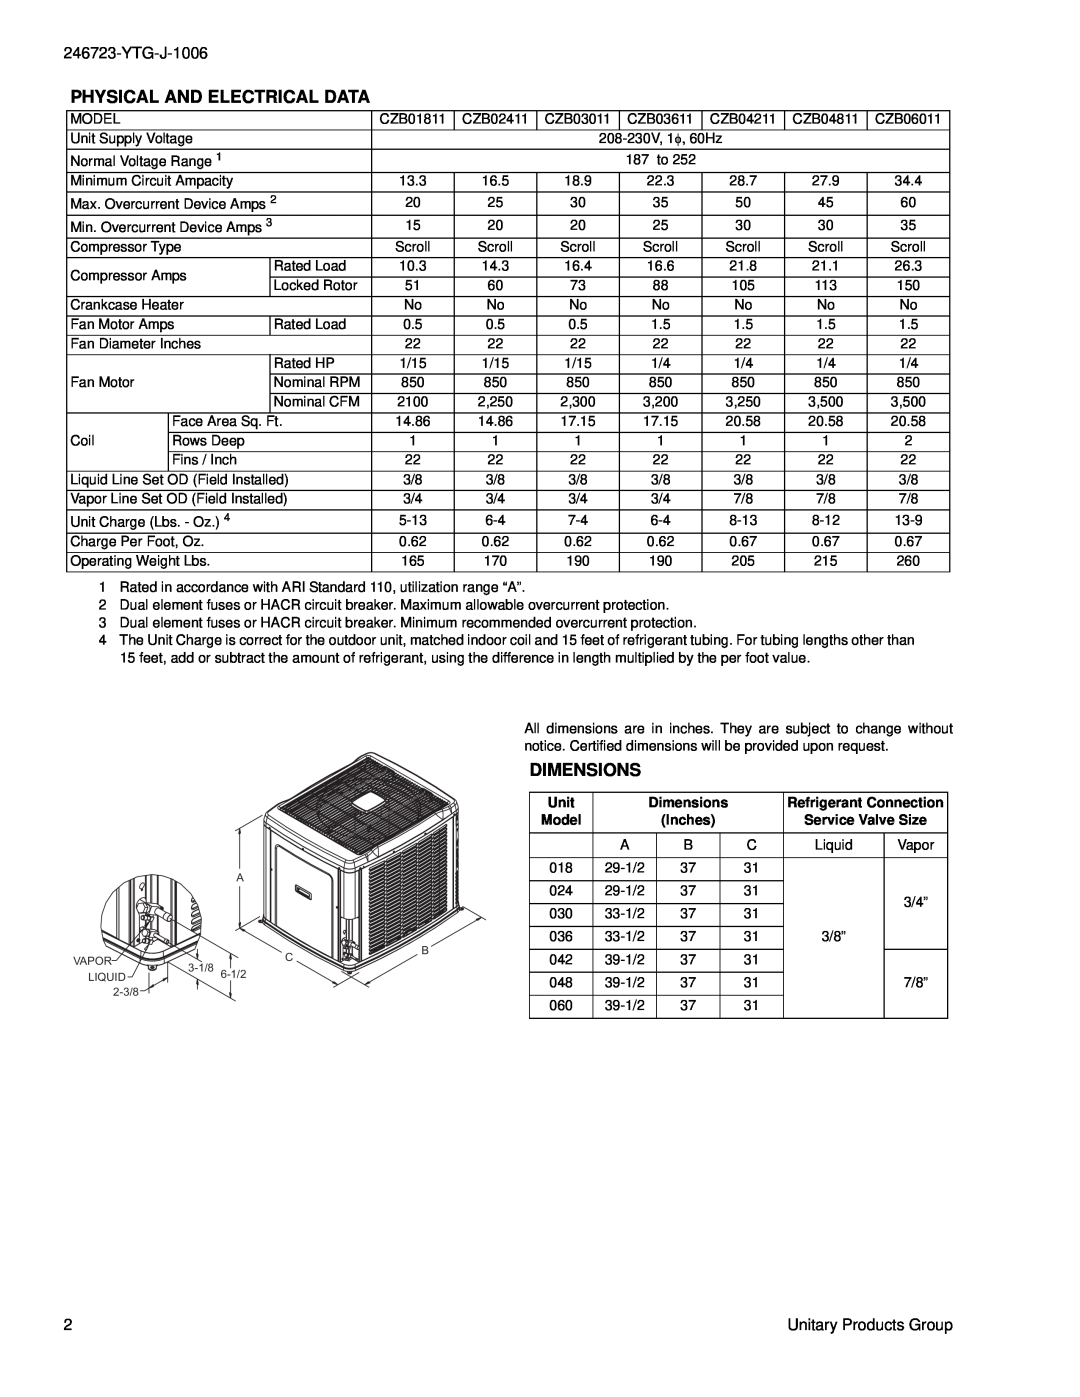 York CZB018 THRU 060 warranty Physical And Electrical Data, Dimensions, YTG-J-1006 